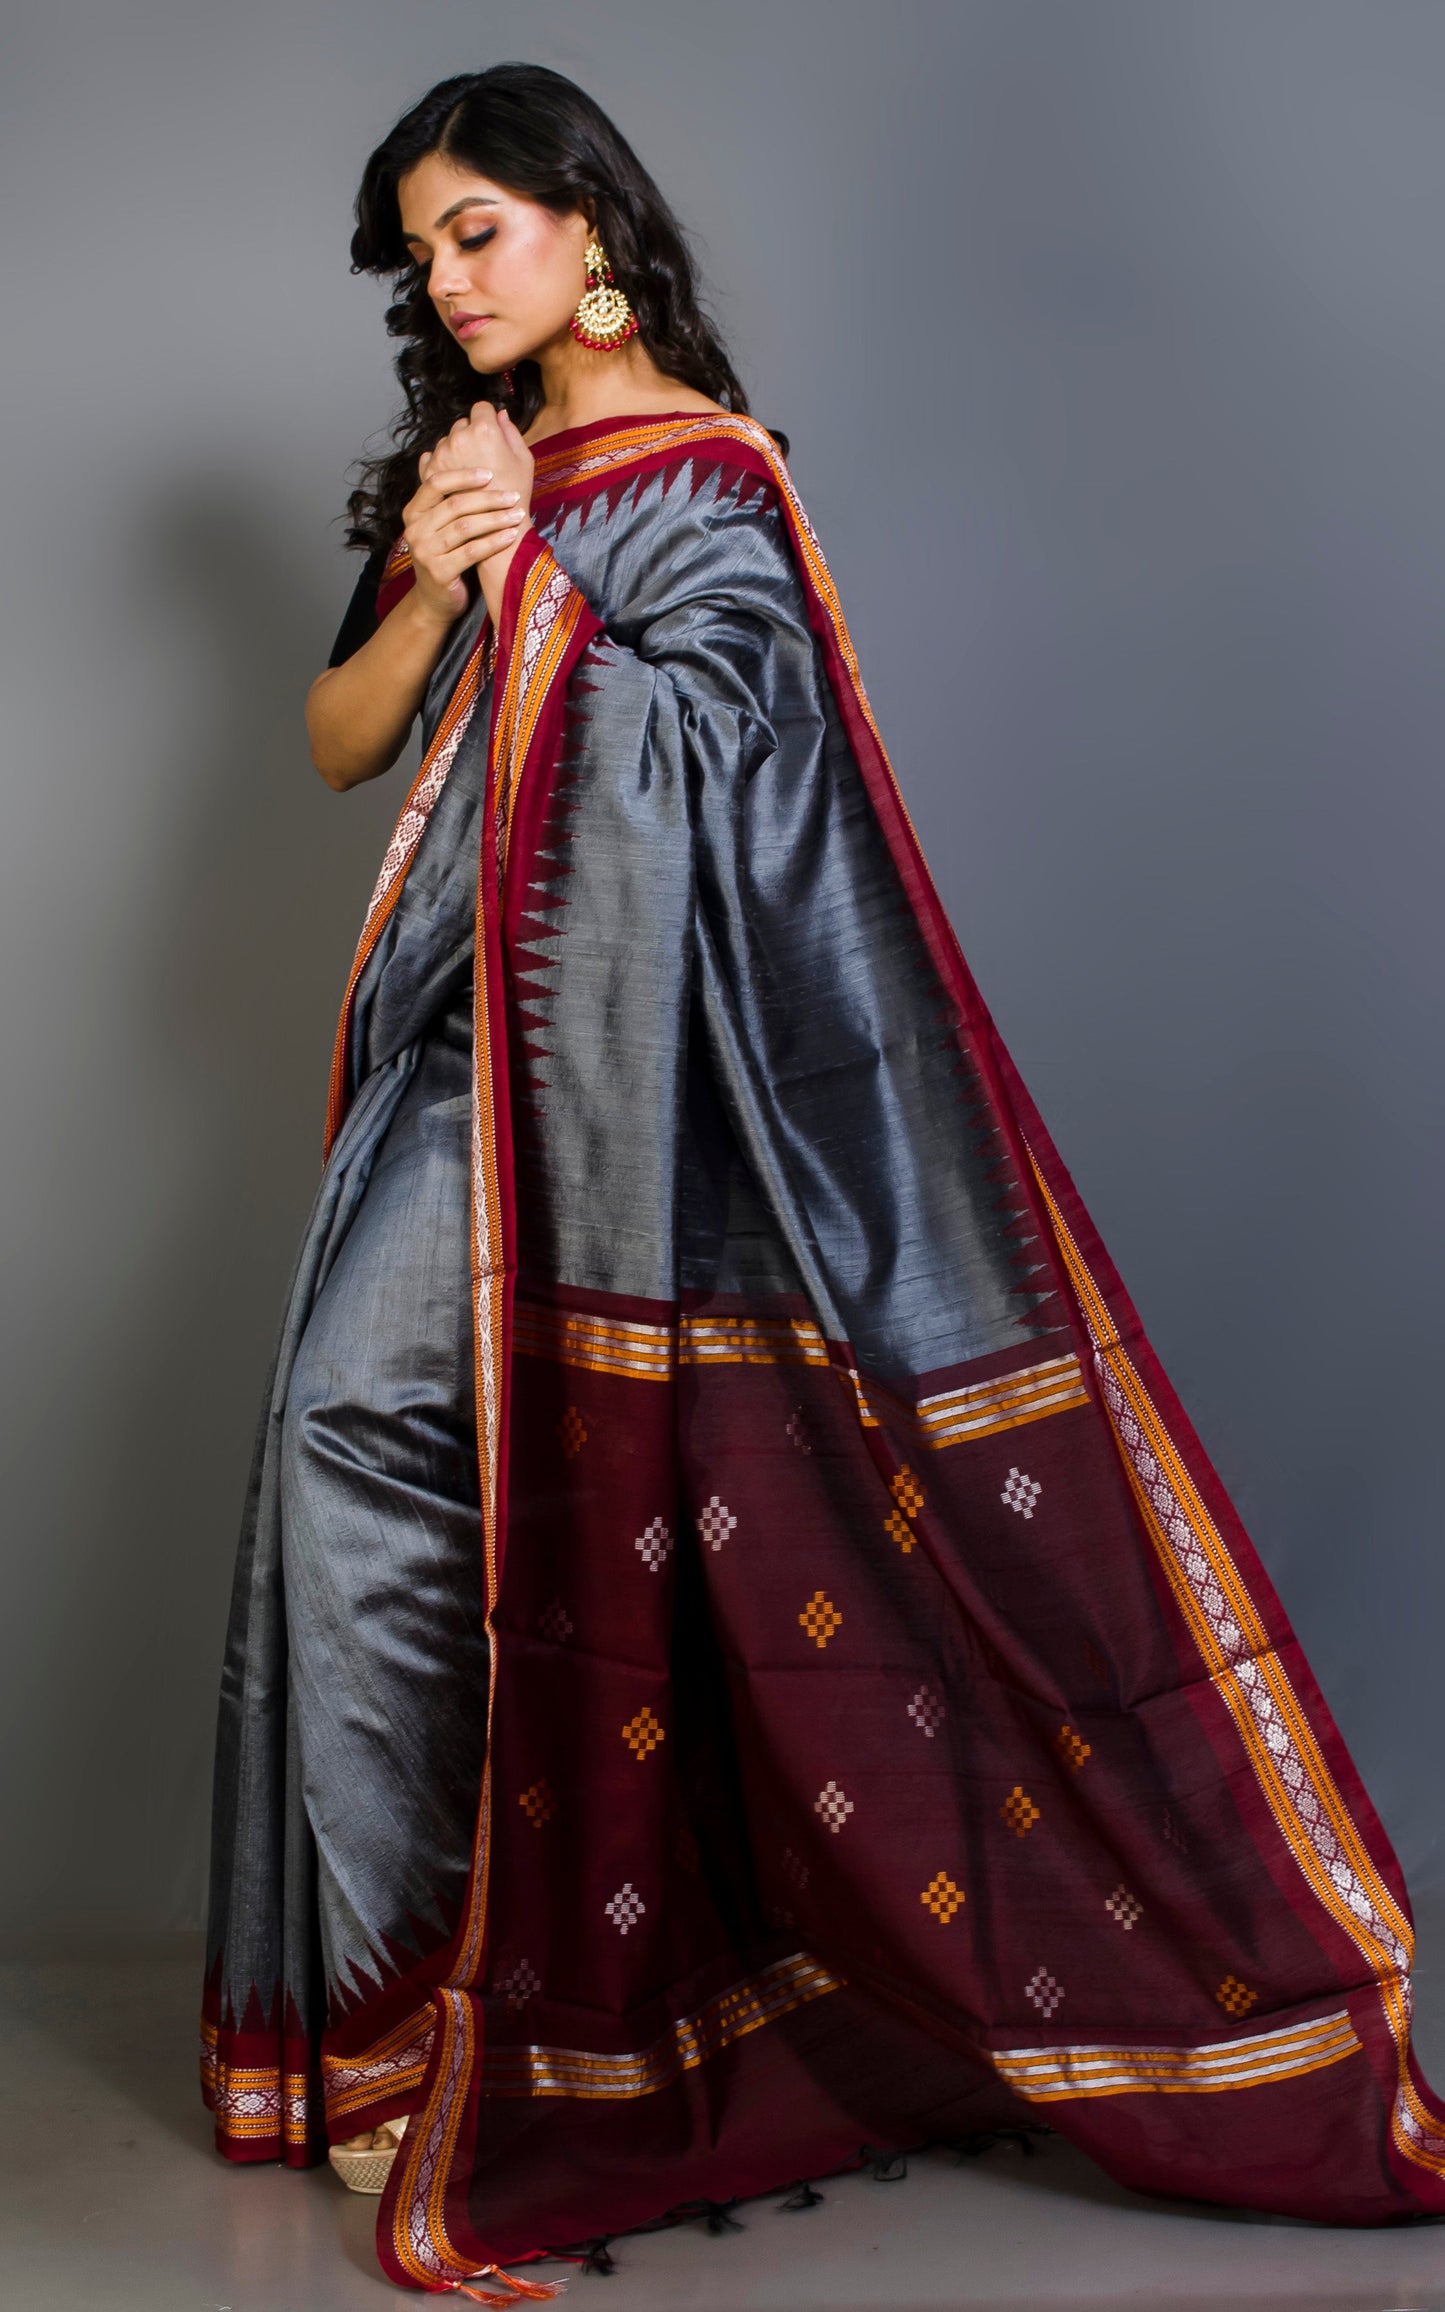 Vidarbha Tussar Raw Silk Saree in Pewter Grey, Maroon, Sunset Orange and Off White